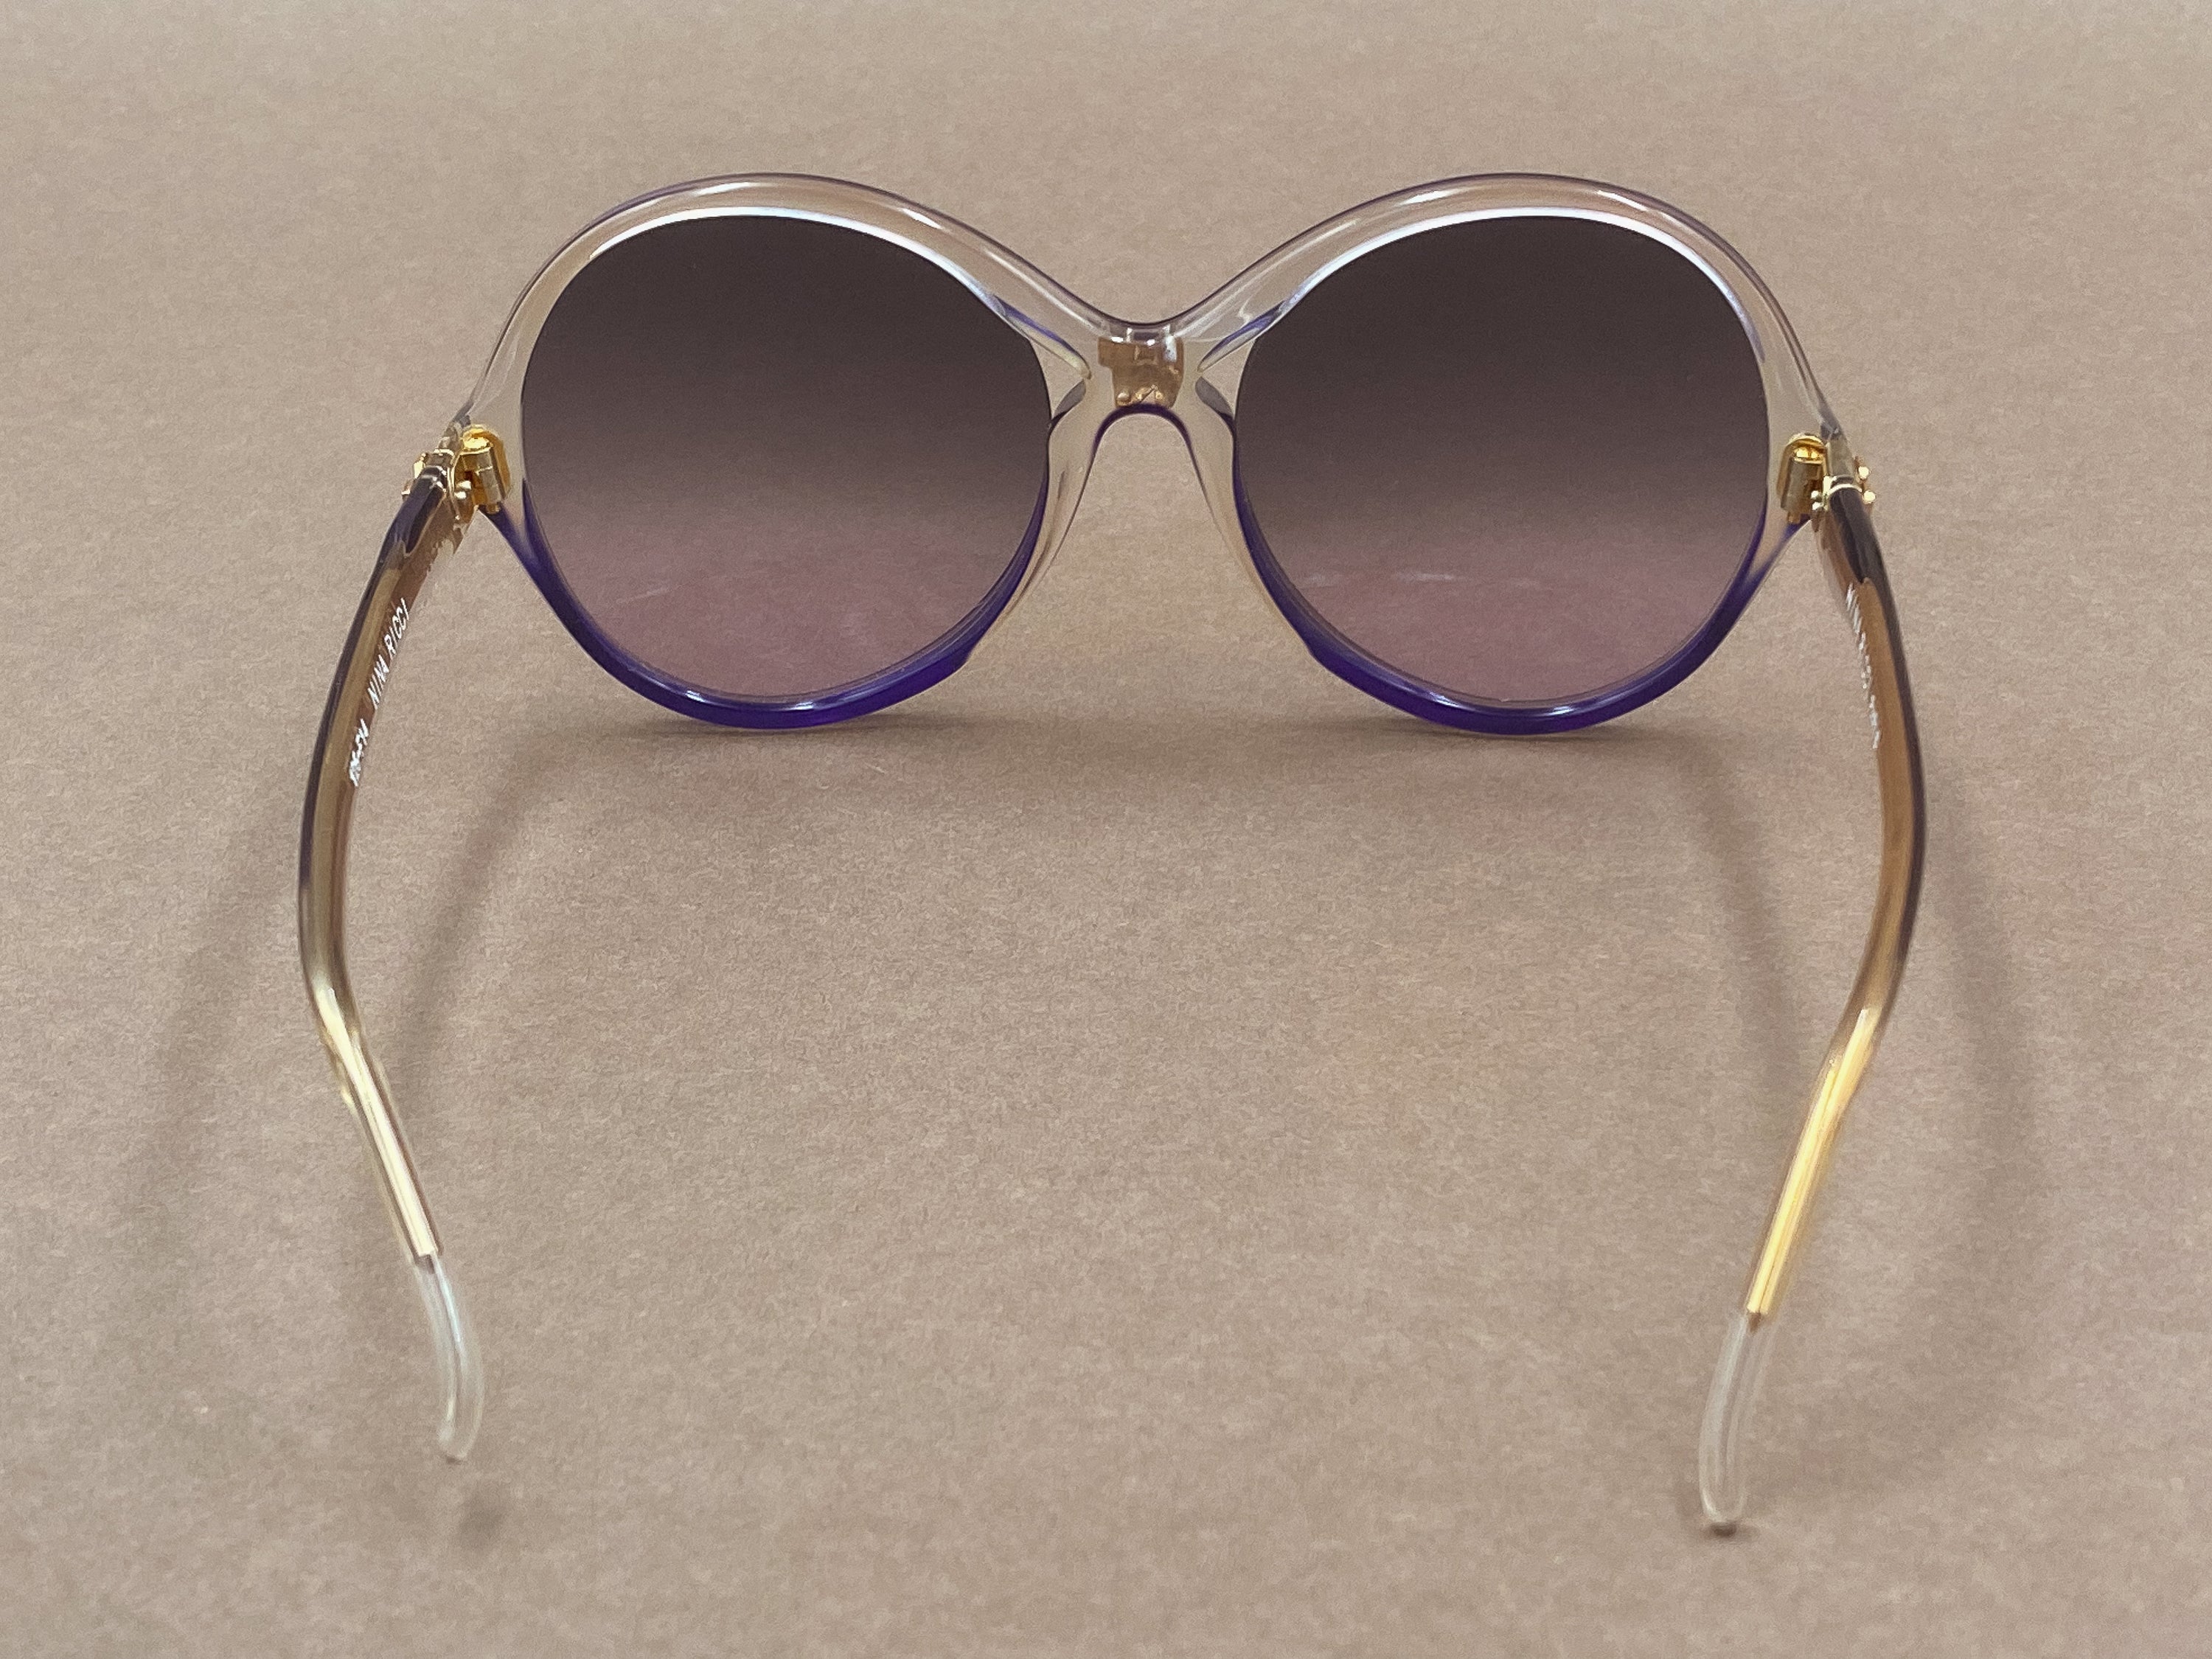 Nina Ricci 126-F14 ladies sunglasses